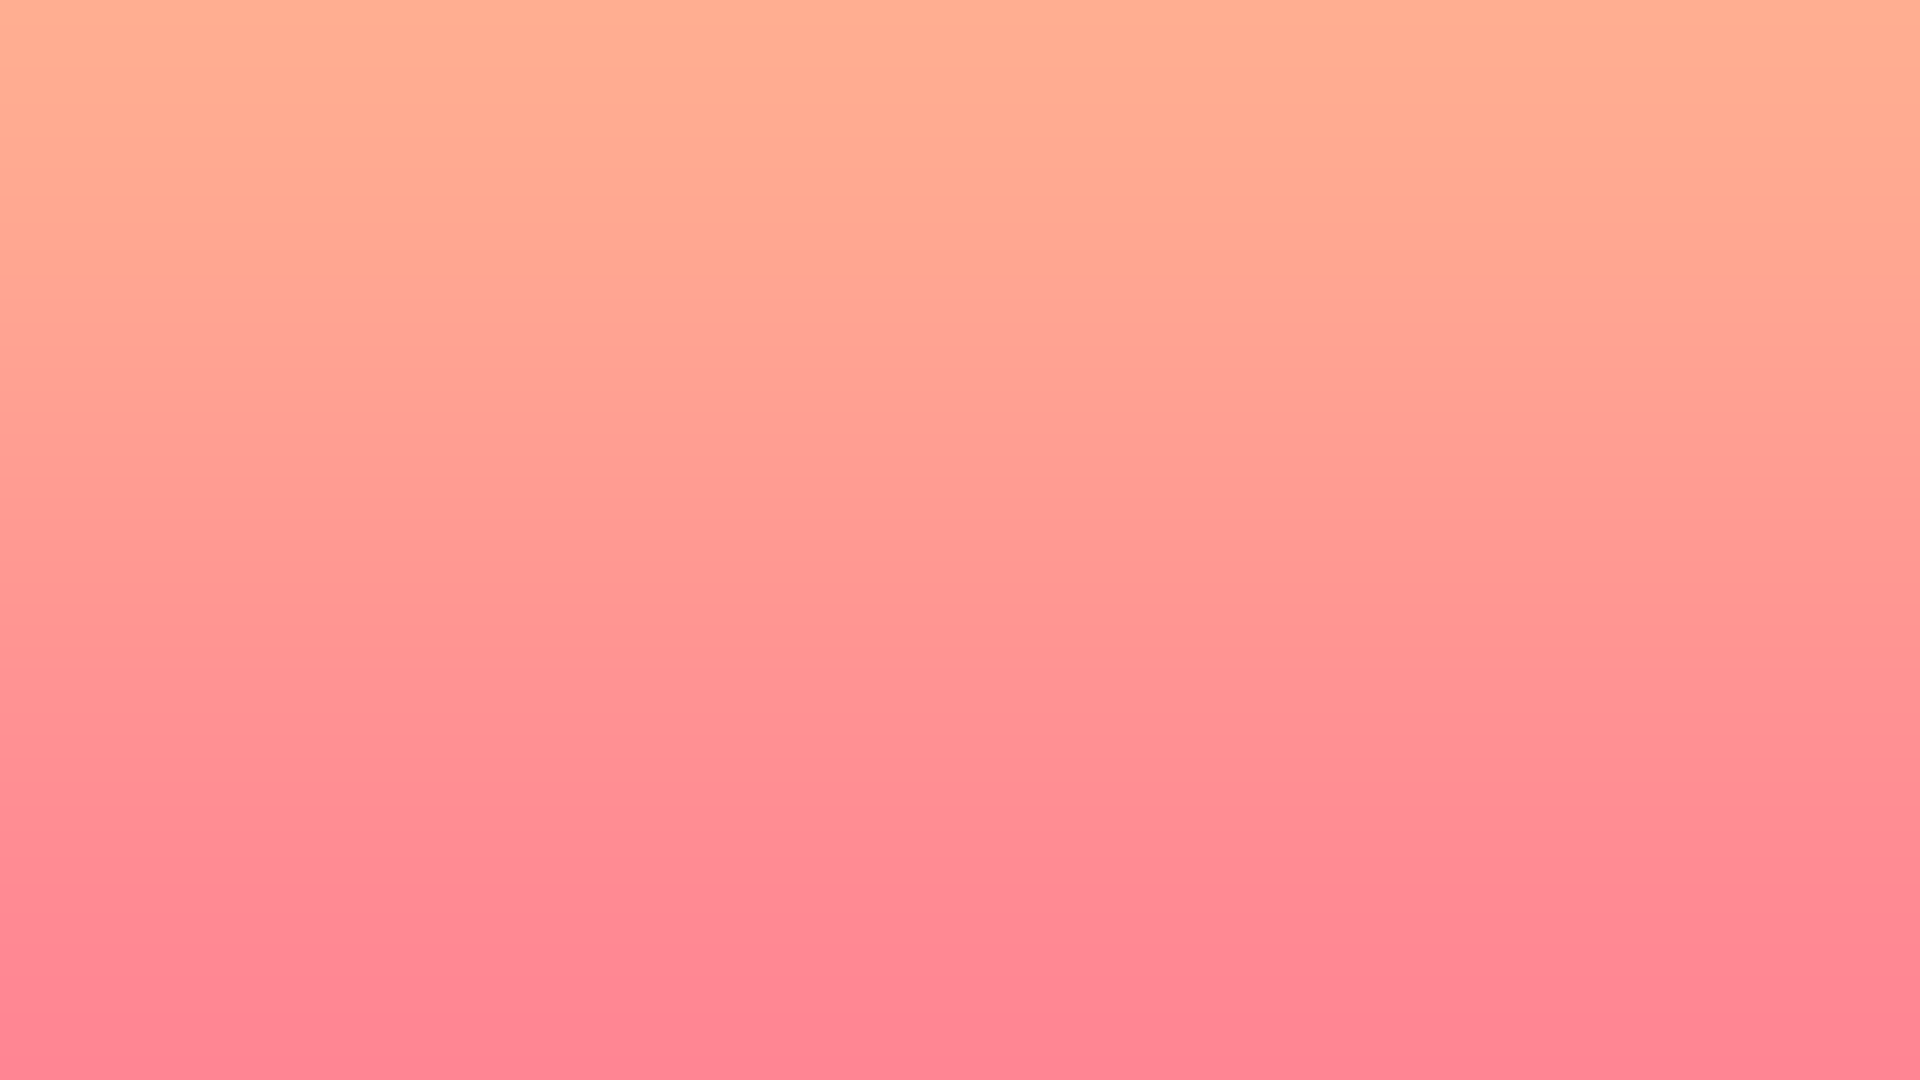 General 1920x1080 gradient minimalism pink